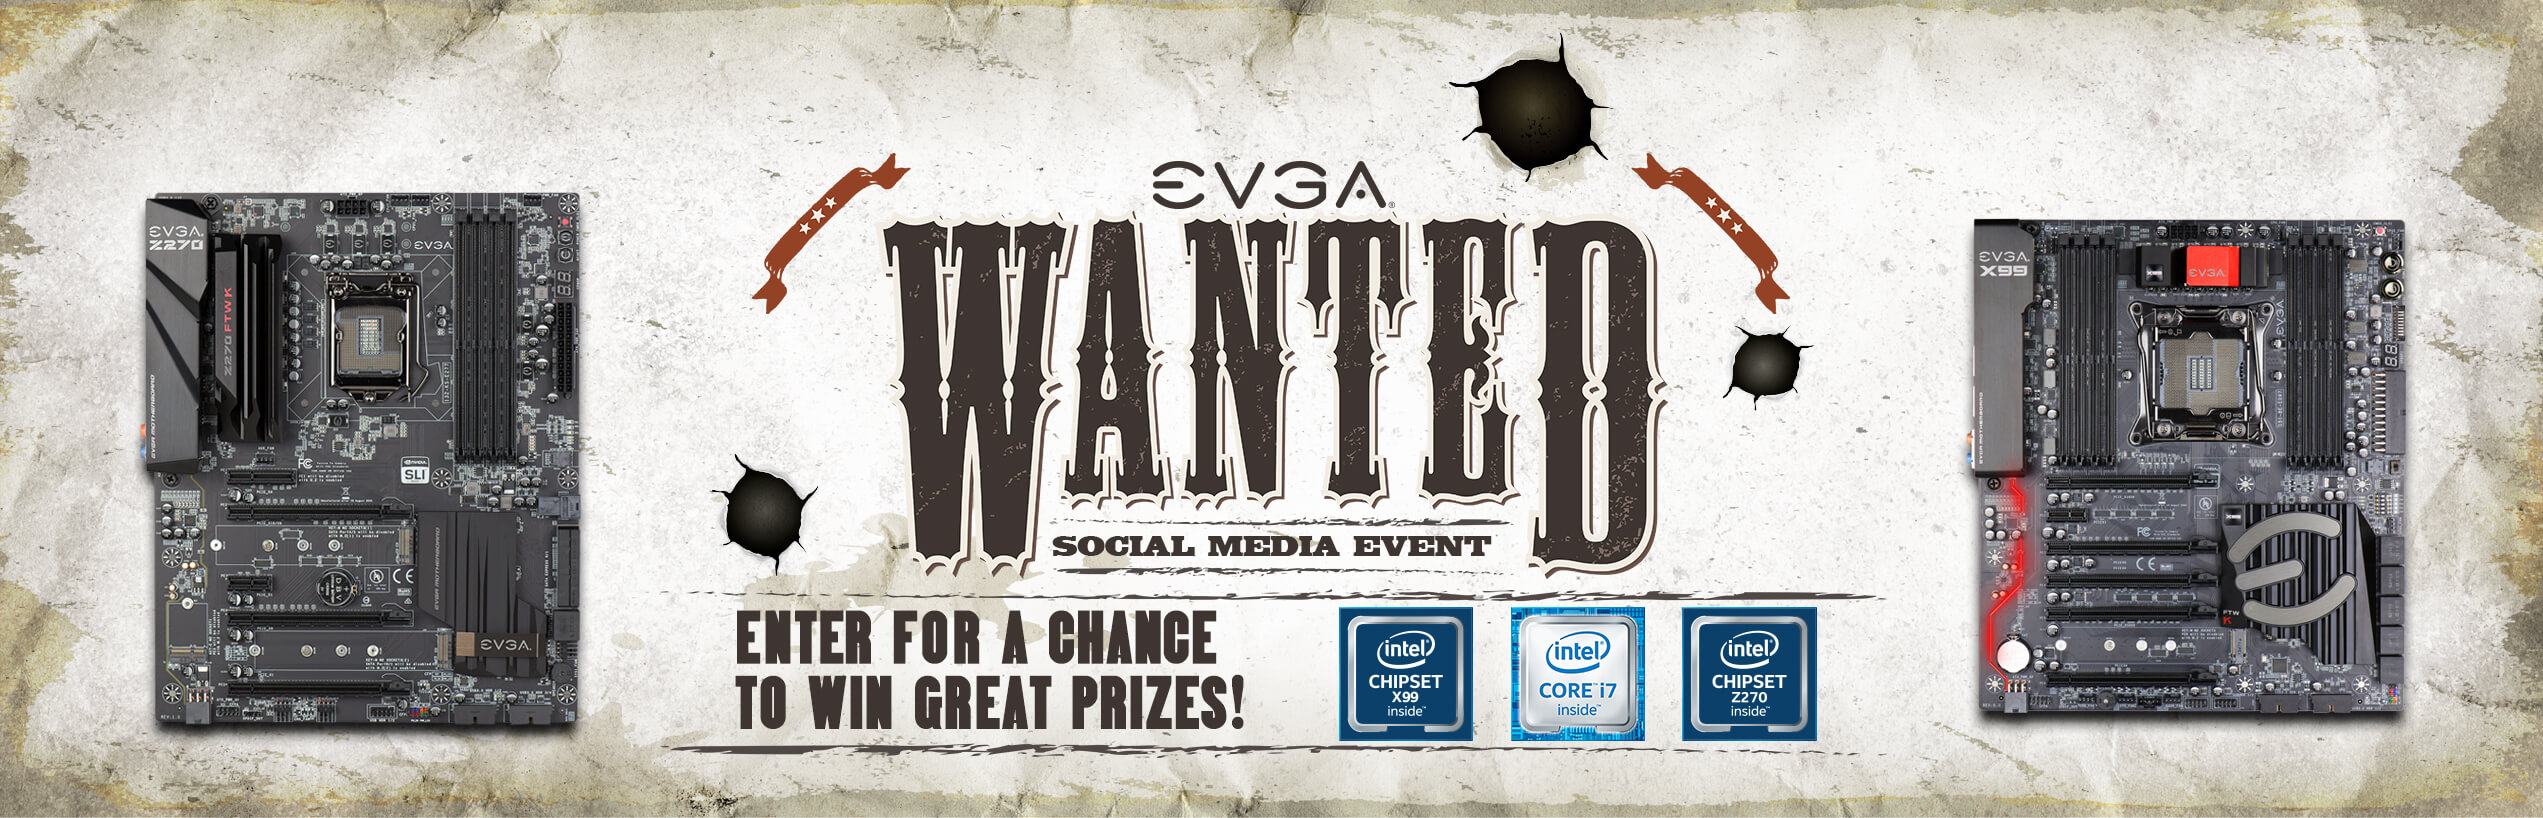 EVGA Wanted! Social Media Event!